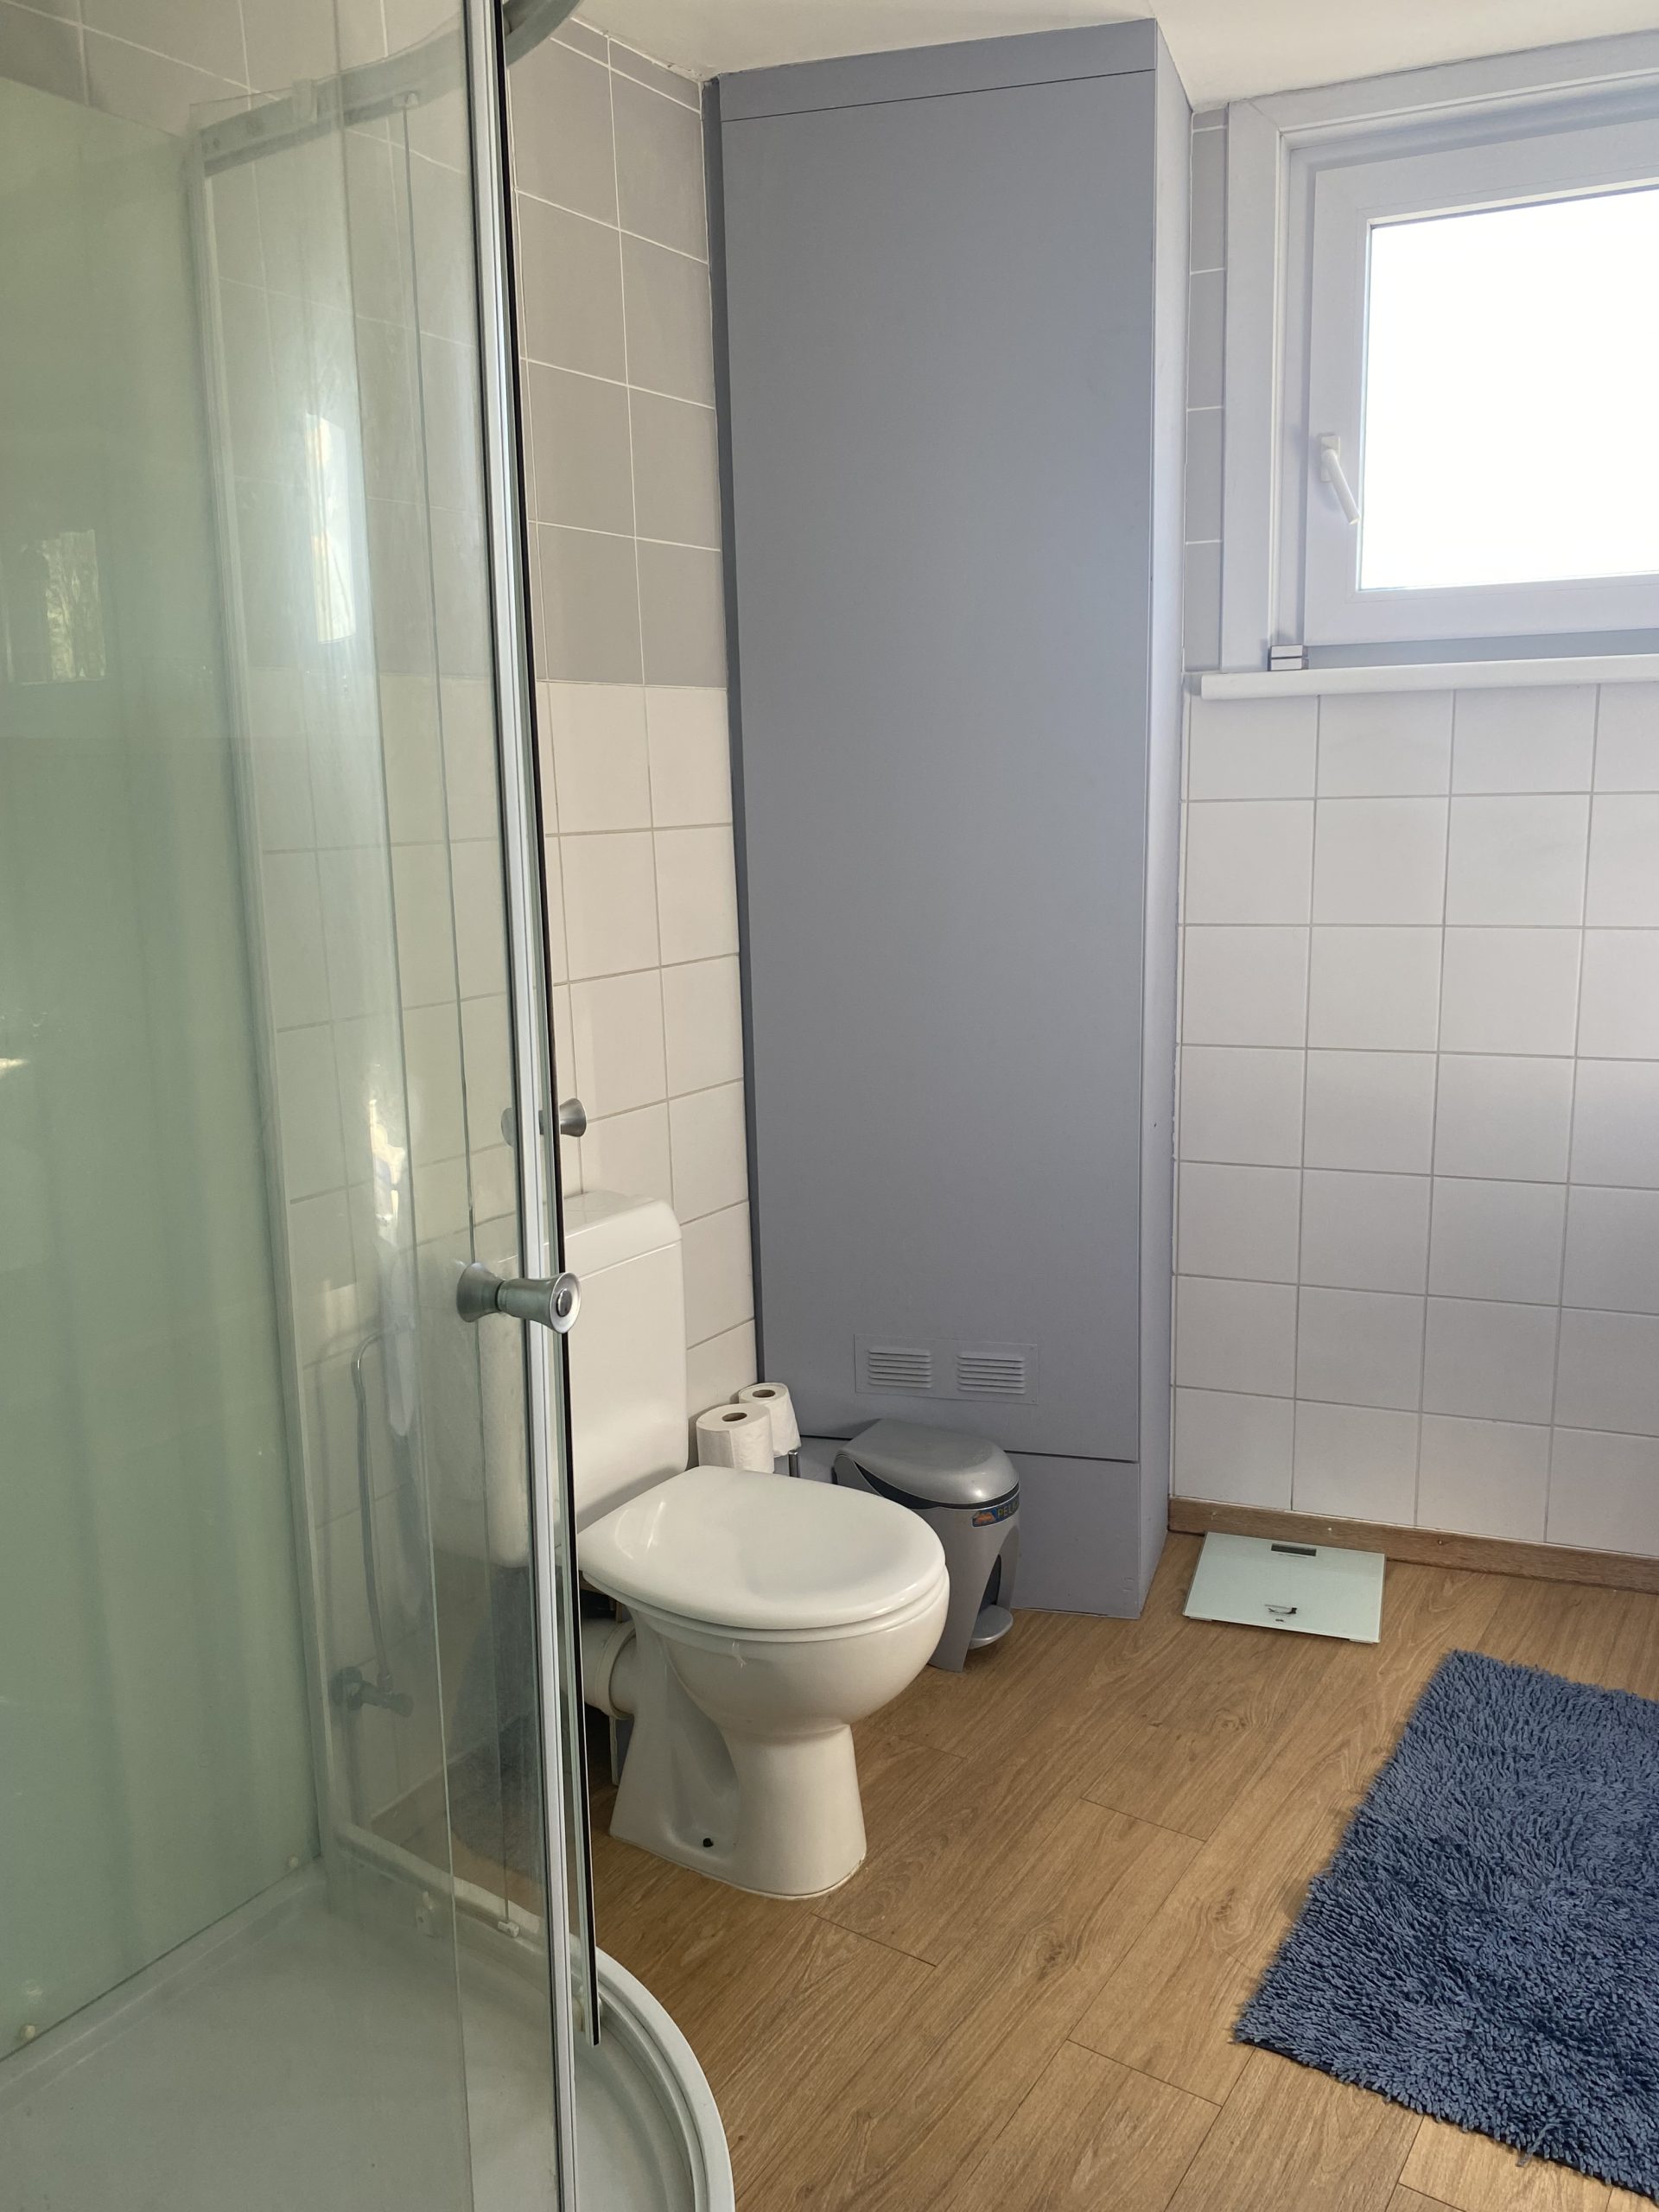 one-bedroom for rent in Ghent -Bathroom